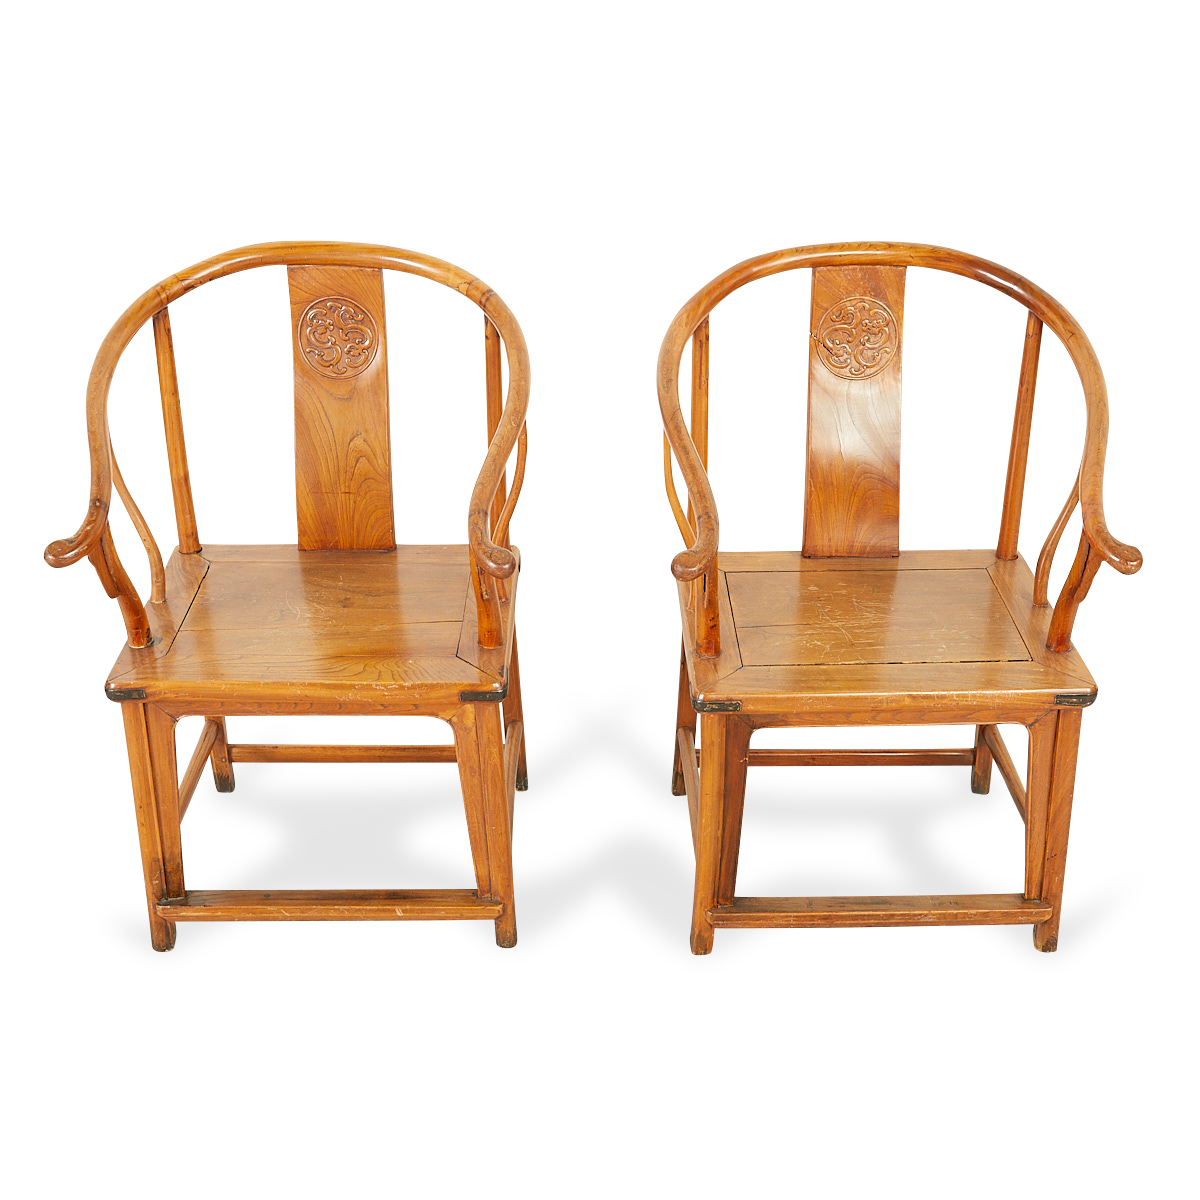 Pair of Chinese Elm Wood Horseshoe Back Armchairs - Image 6 of 14